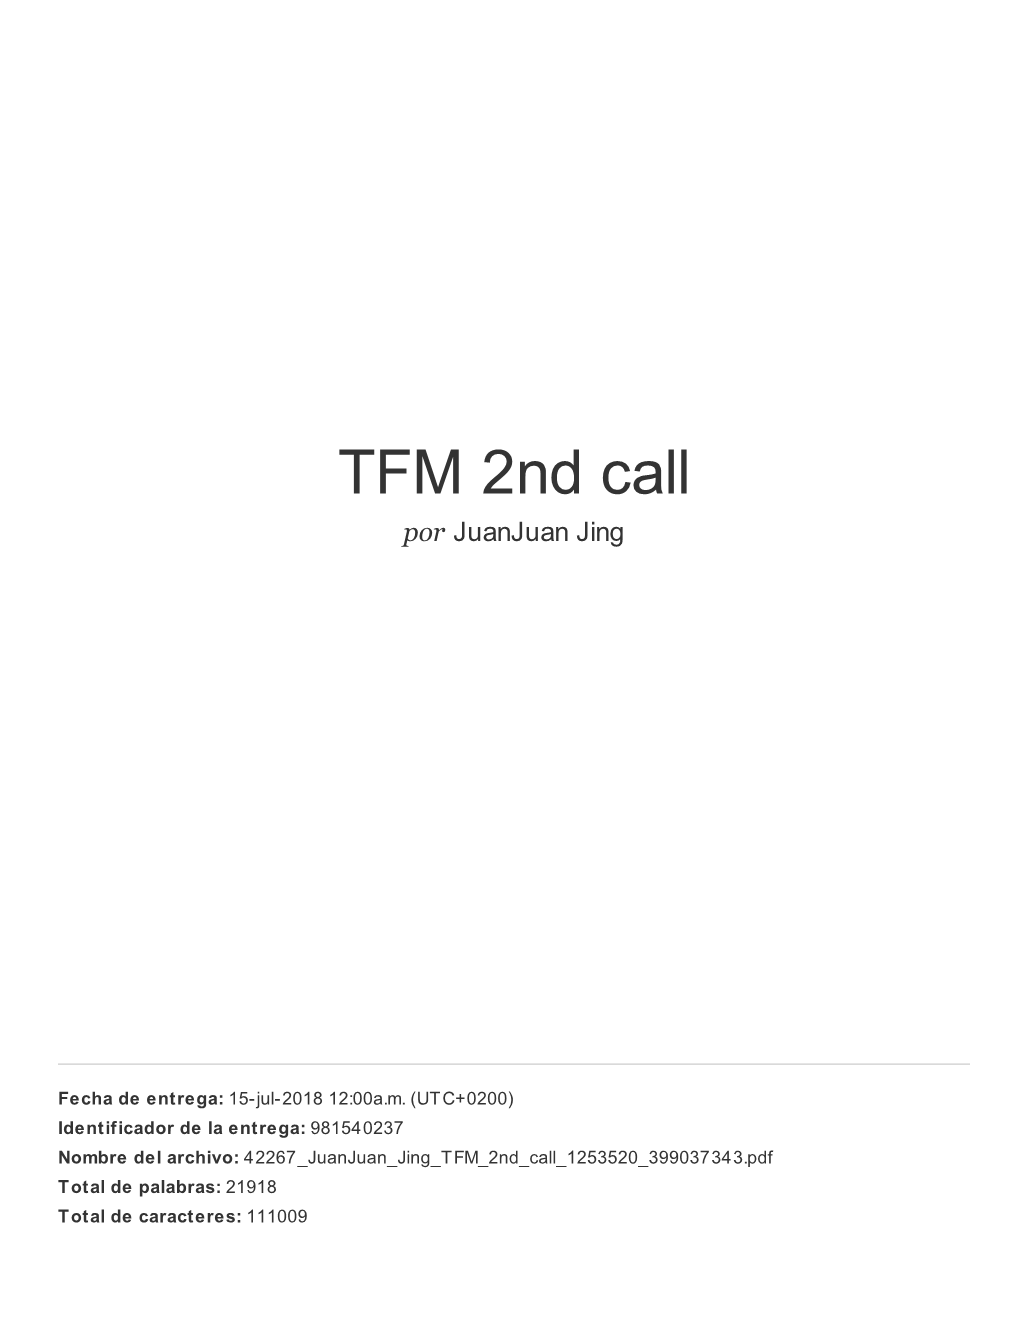 TFM 2Nd Call Por Juanjuan Jing